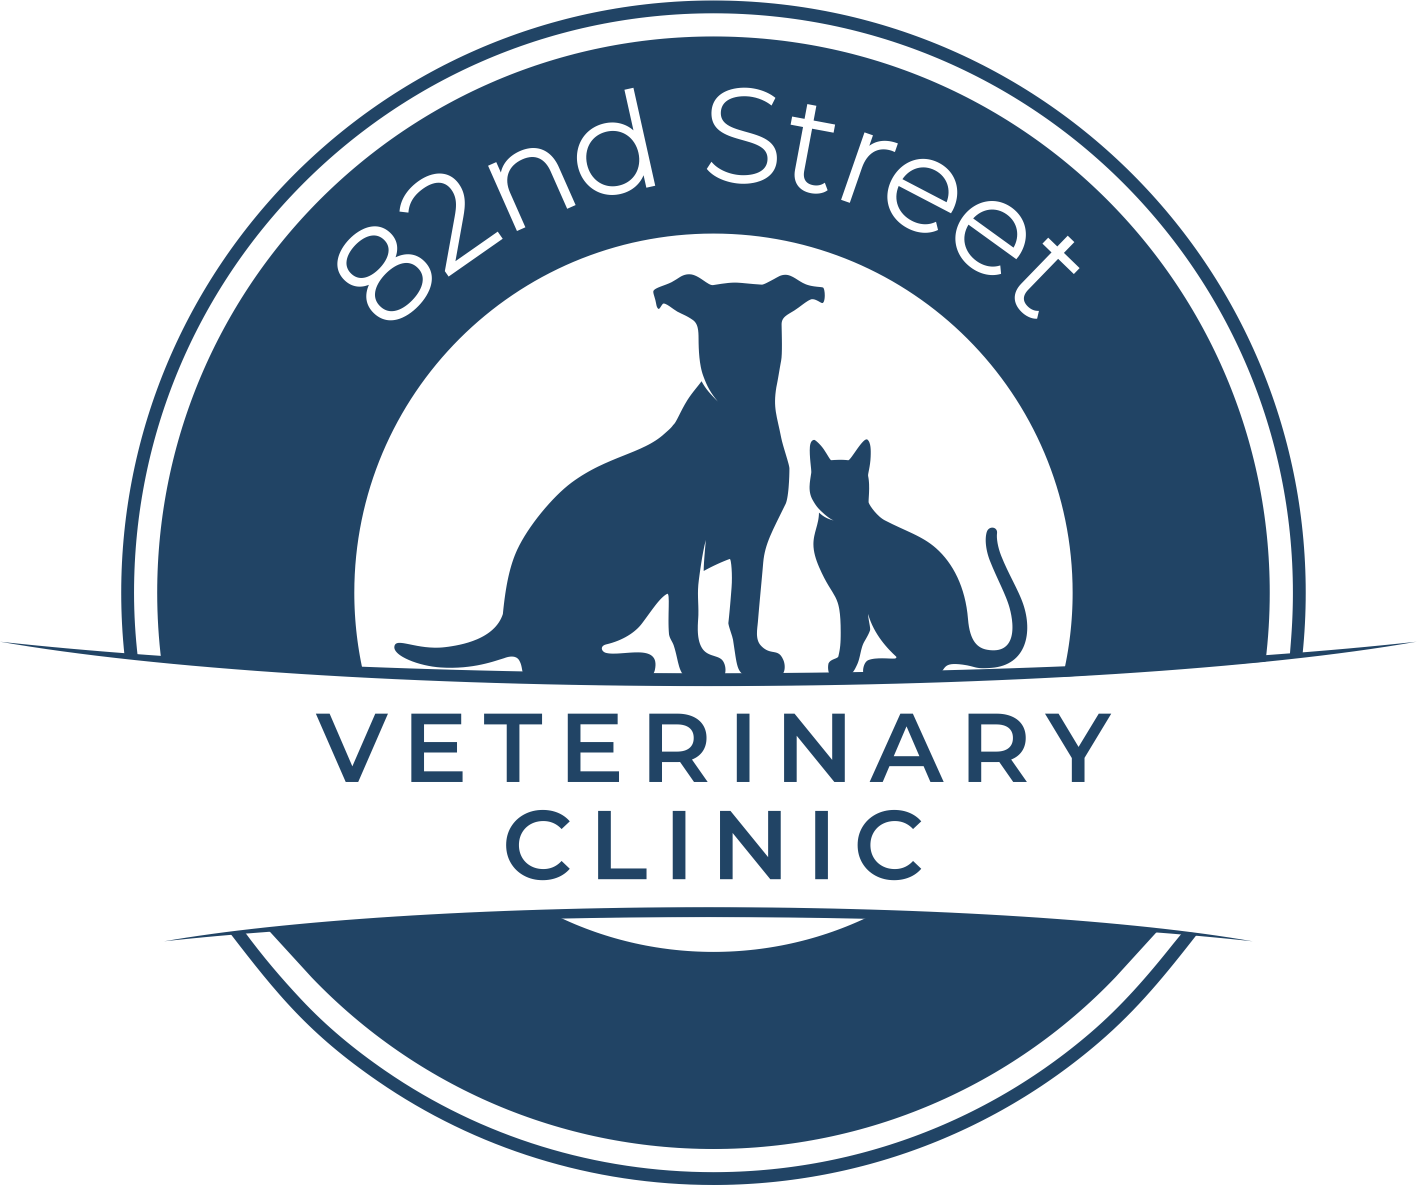 82nd Street Veterinary Clinic